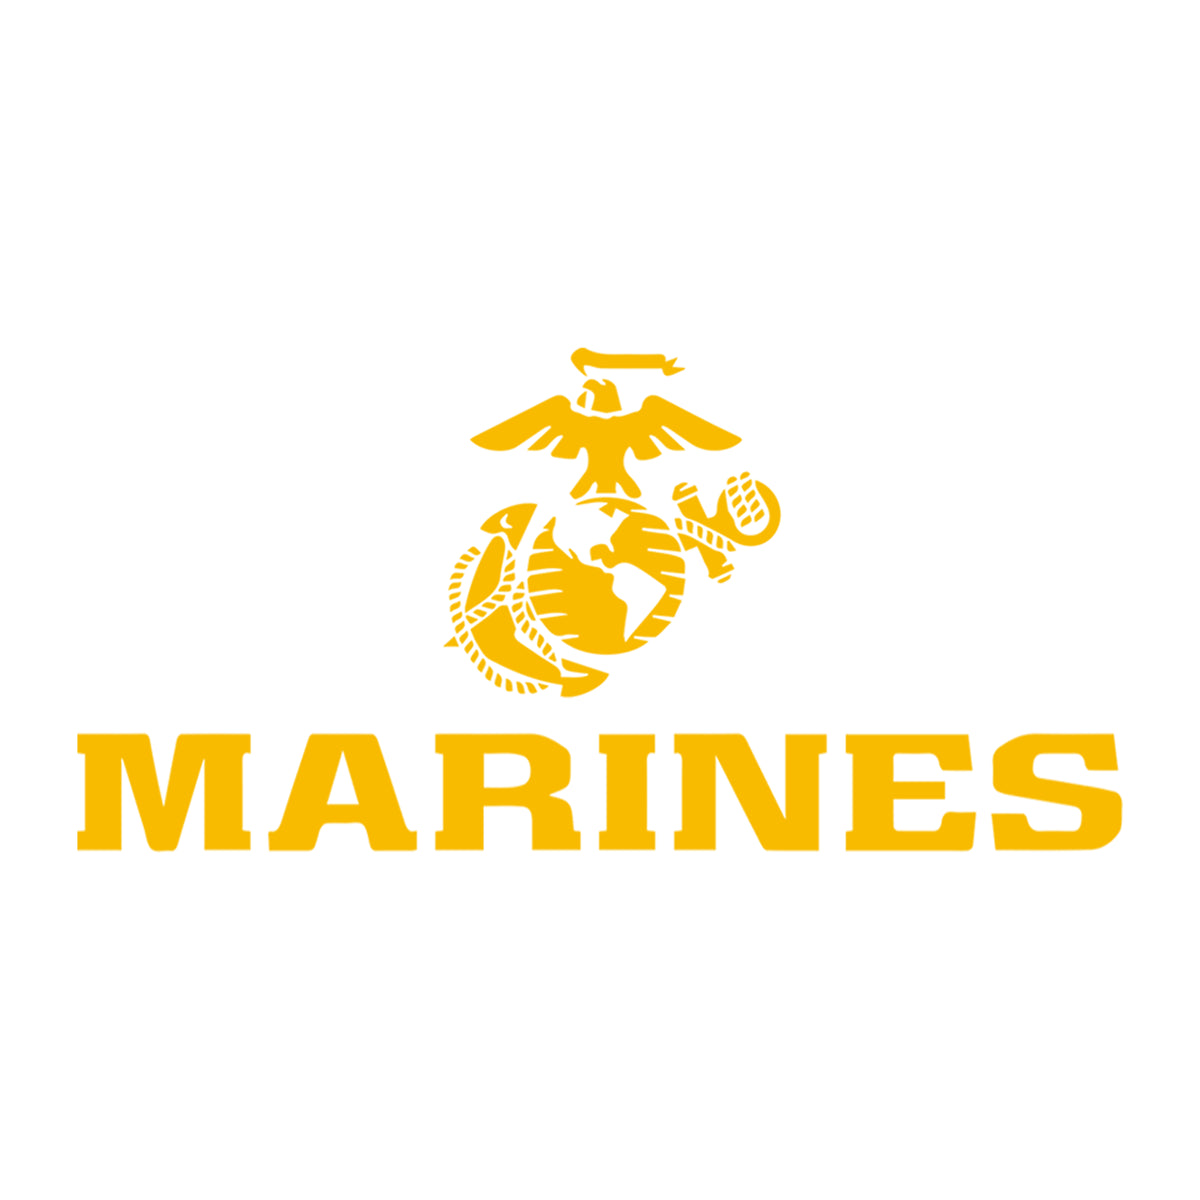 Closeout Gold EGA Marines Long Sleeve Tee